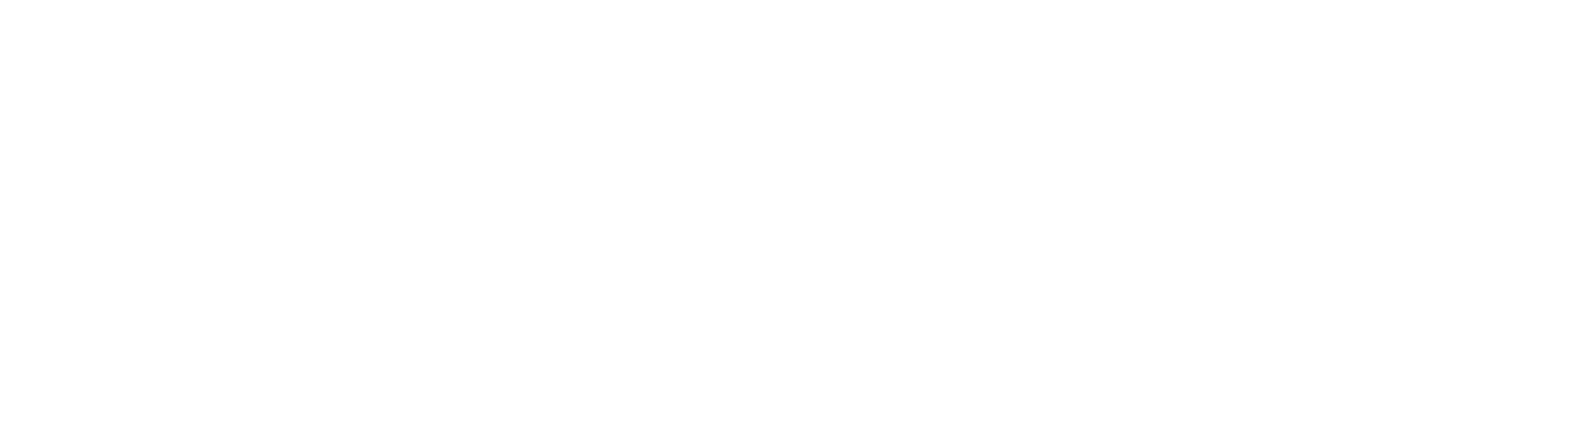 Kite Realty logo large for dark backgrounds (transparent PNG)